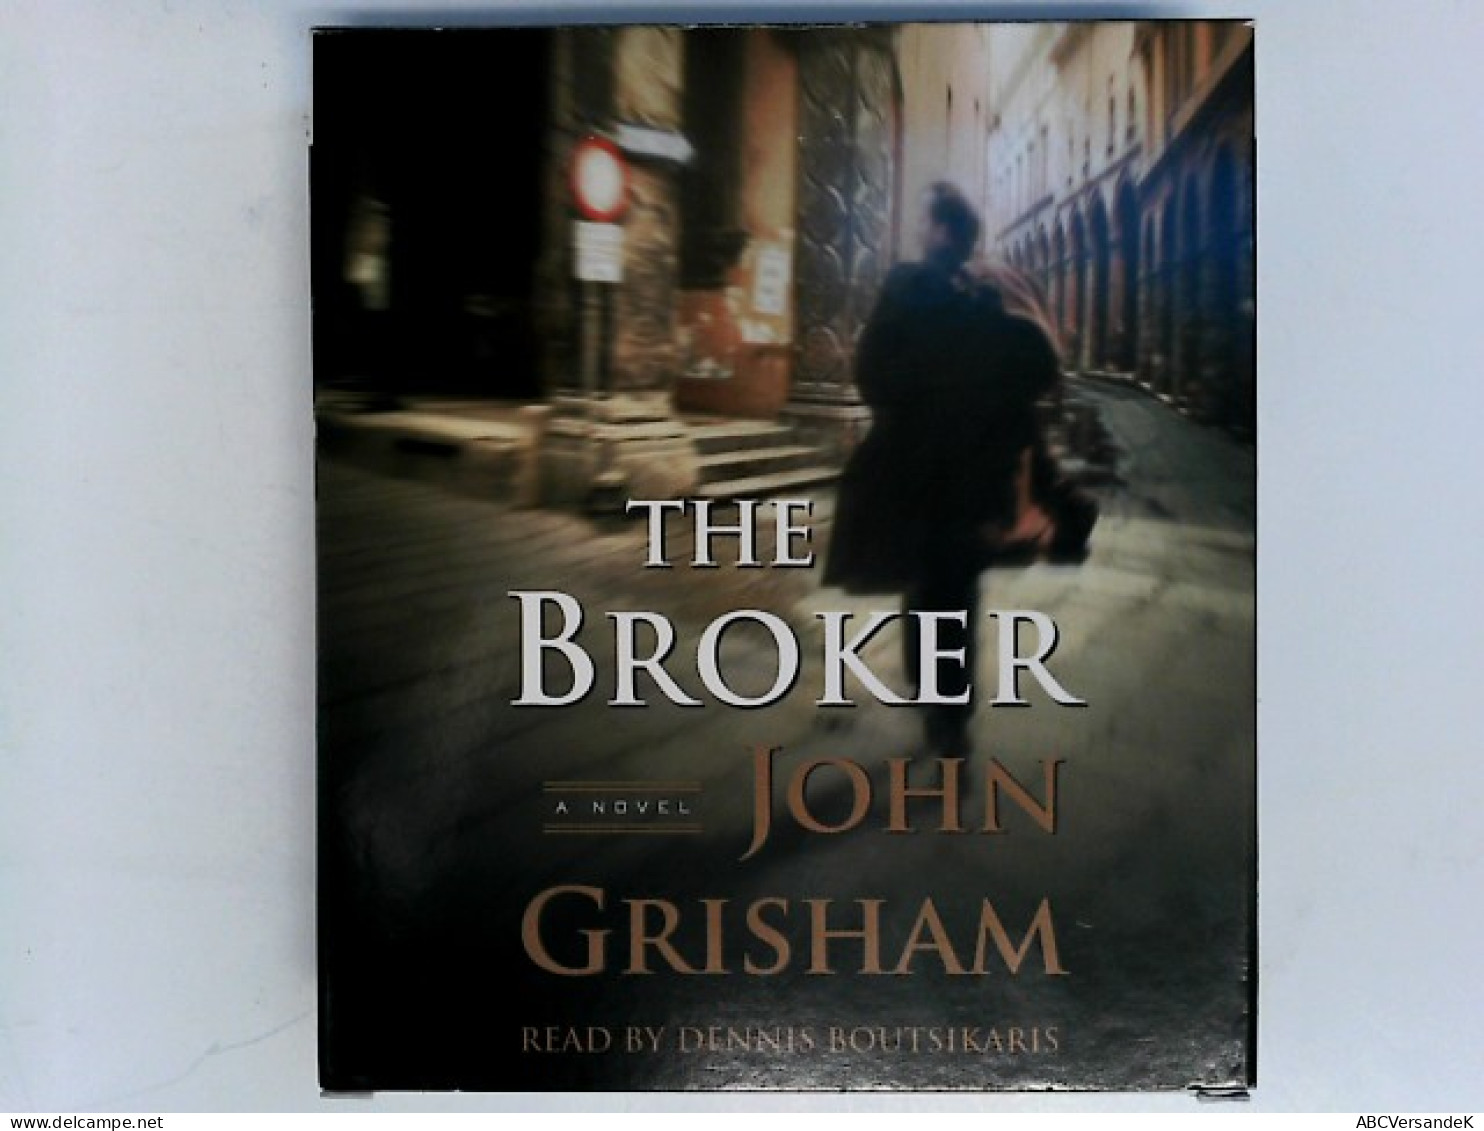 The Broker: A Novel (John Grisham) - CD